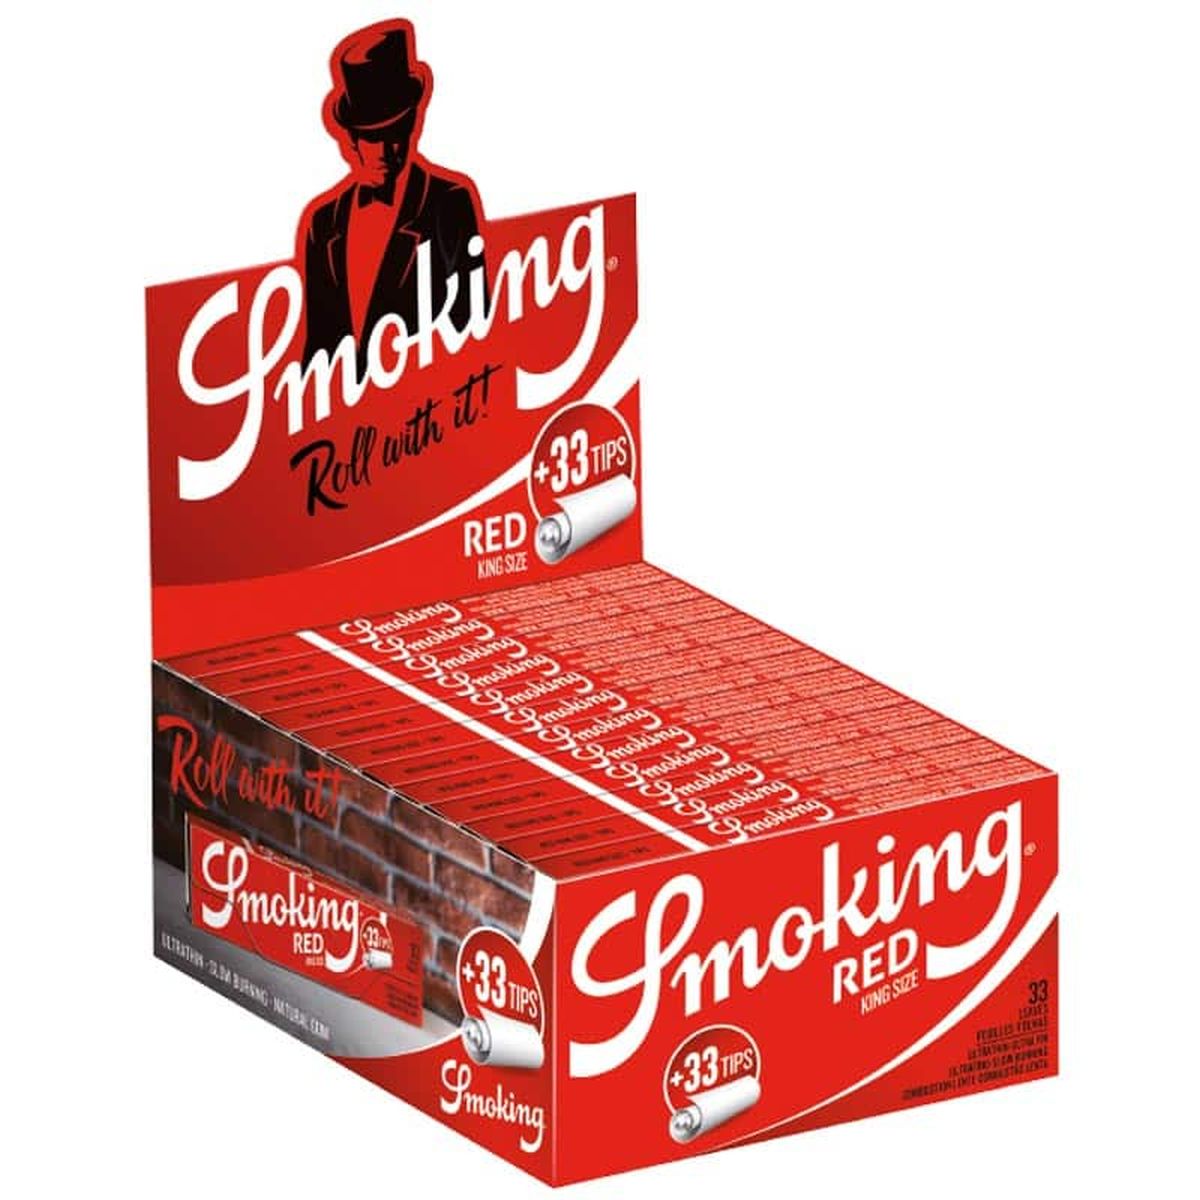 Smoking Smoking King Size Red Zigarettenpapier + Tips bei www.Tabakring.de kaufen